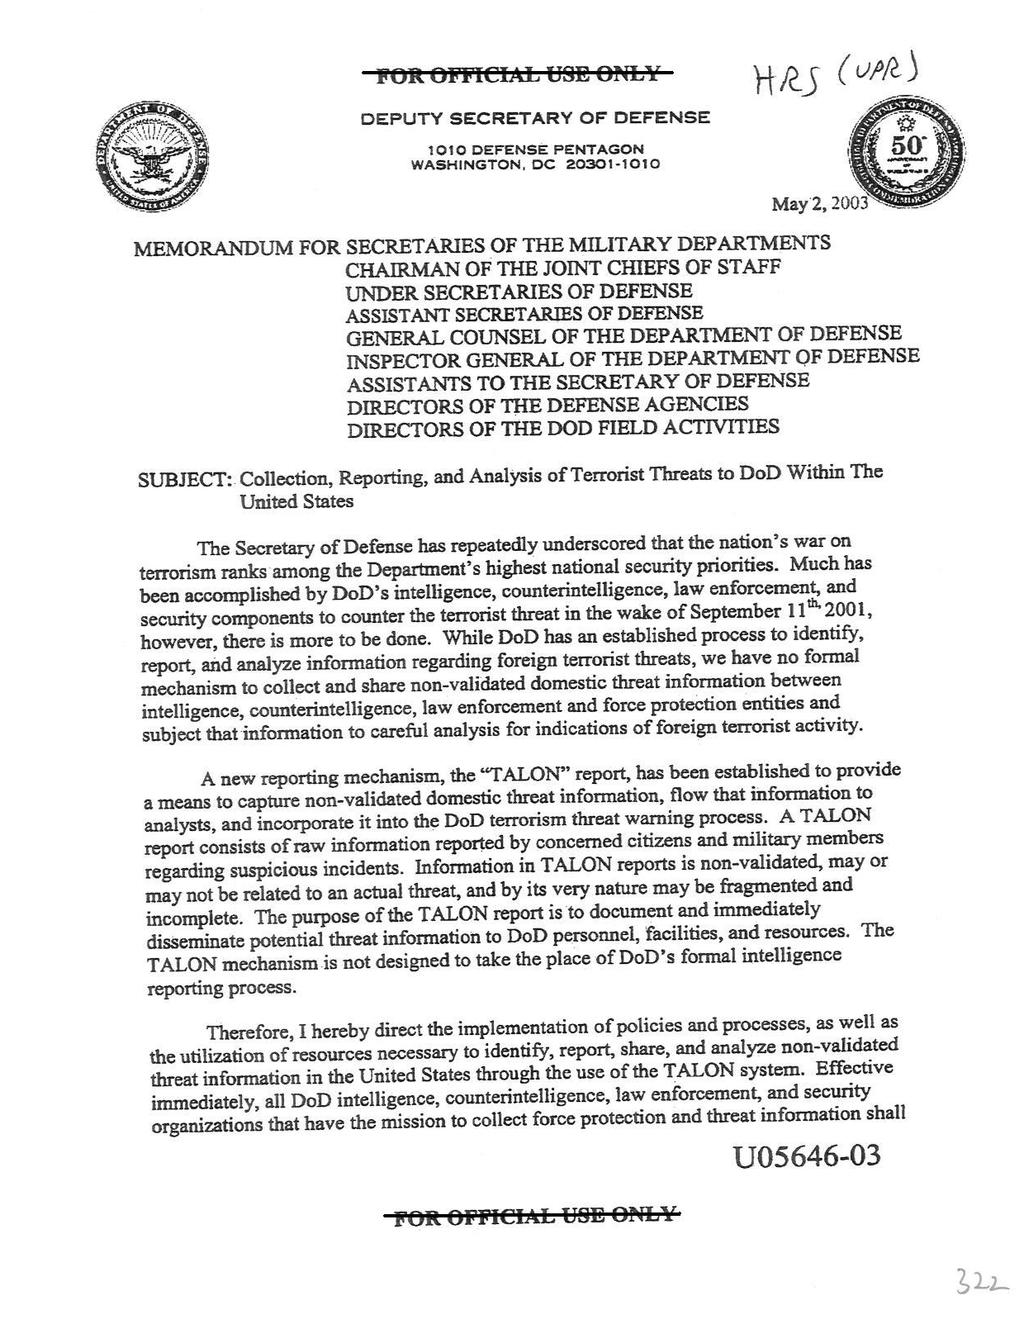 Appendix F. Deputy Secretary of Defense May 2, 2003, Memorandum P:Olt Ot't'ICIAt t:js~ OrftJY DEPUTY SECRETARY OF DEFENSE 1010 OEFENSE PENTAGON WASHINGTON.